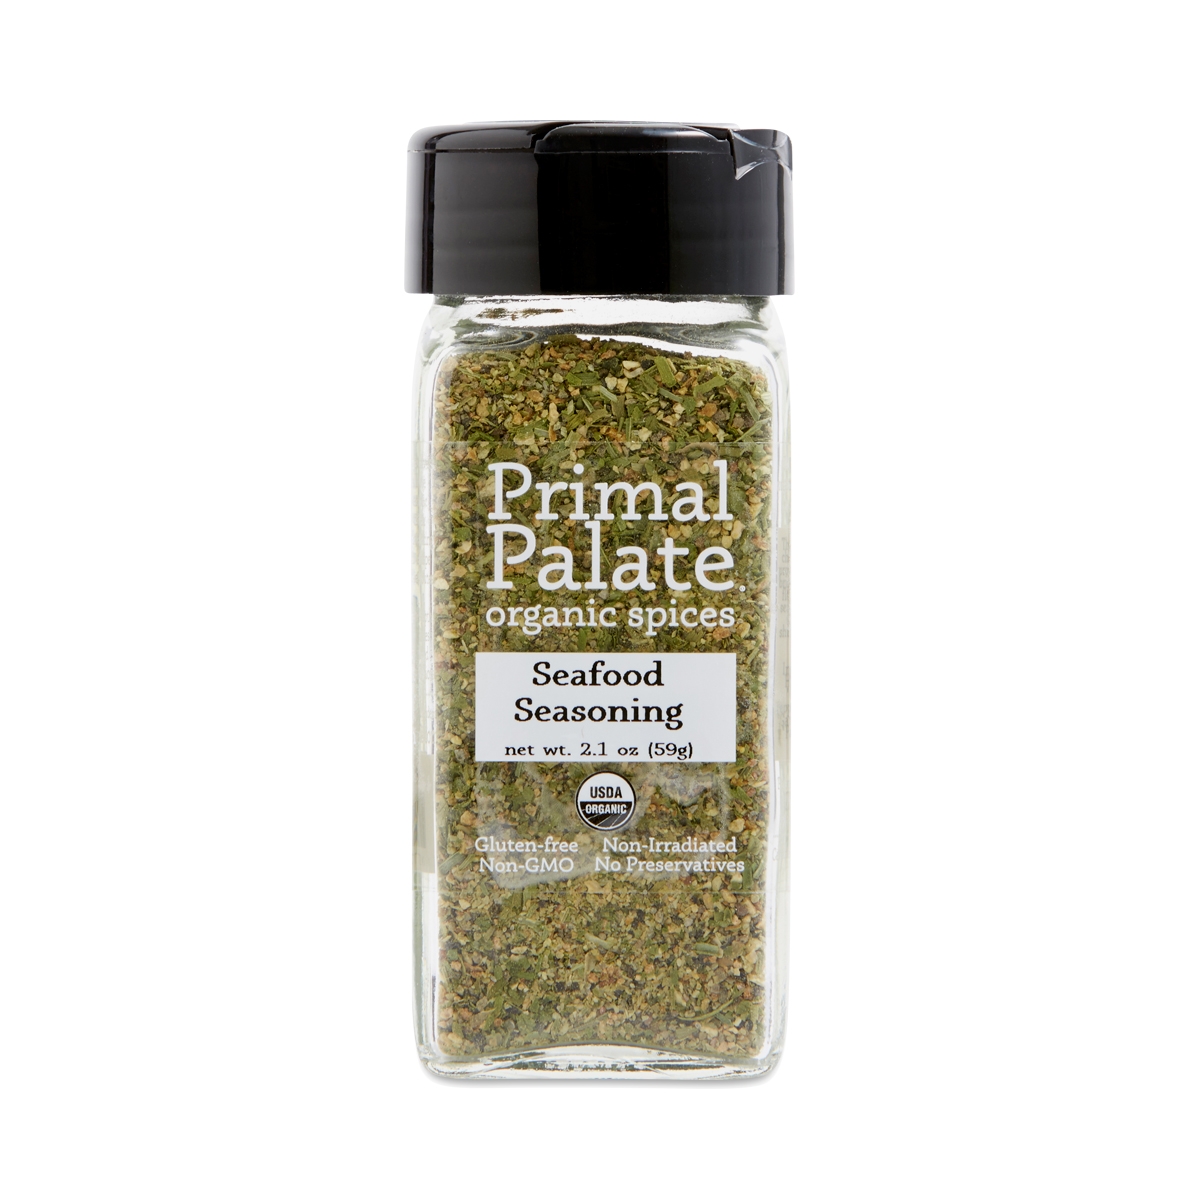 Primal Palate Seasoning, Seafood 2.1 oz jar